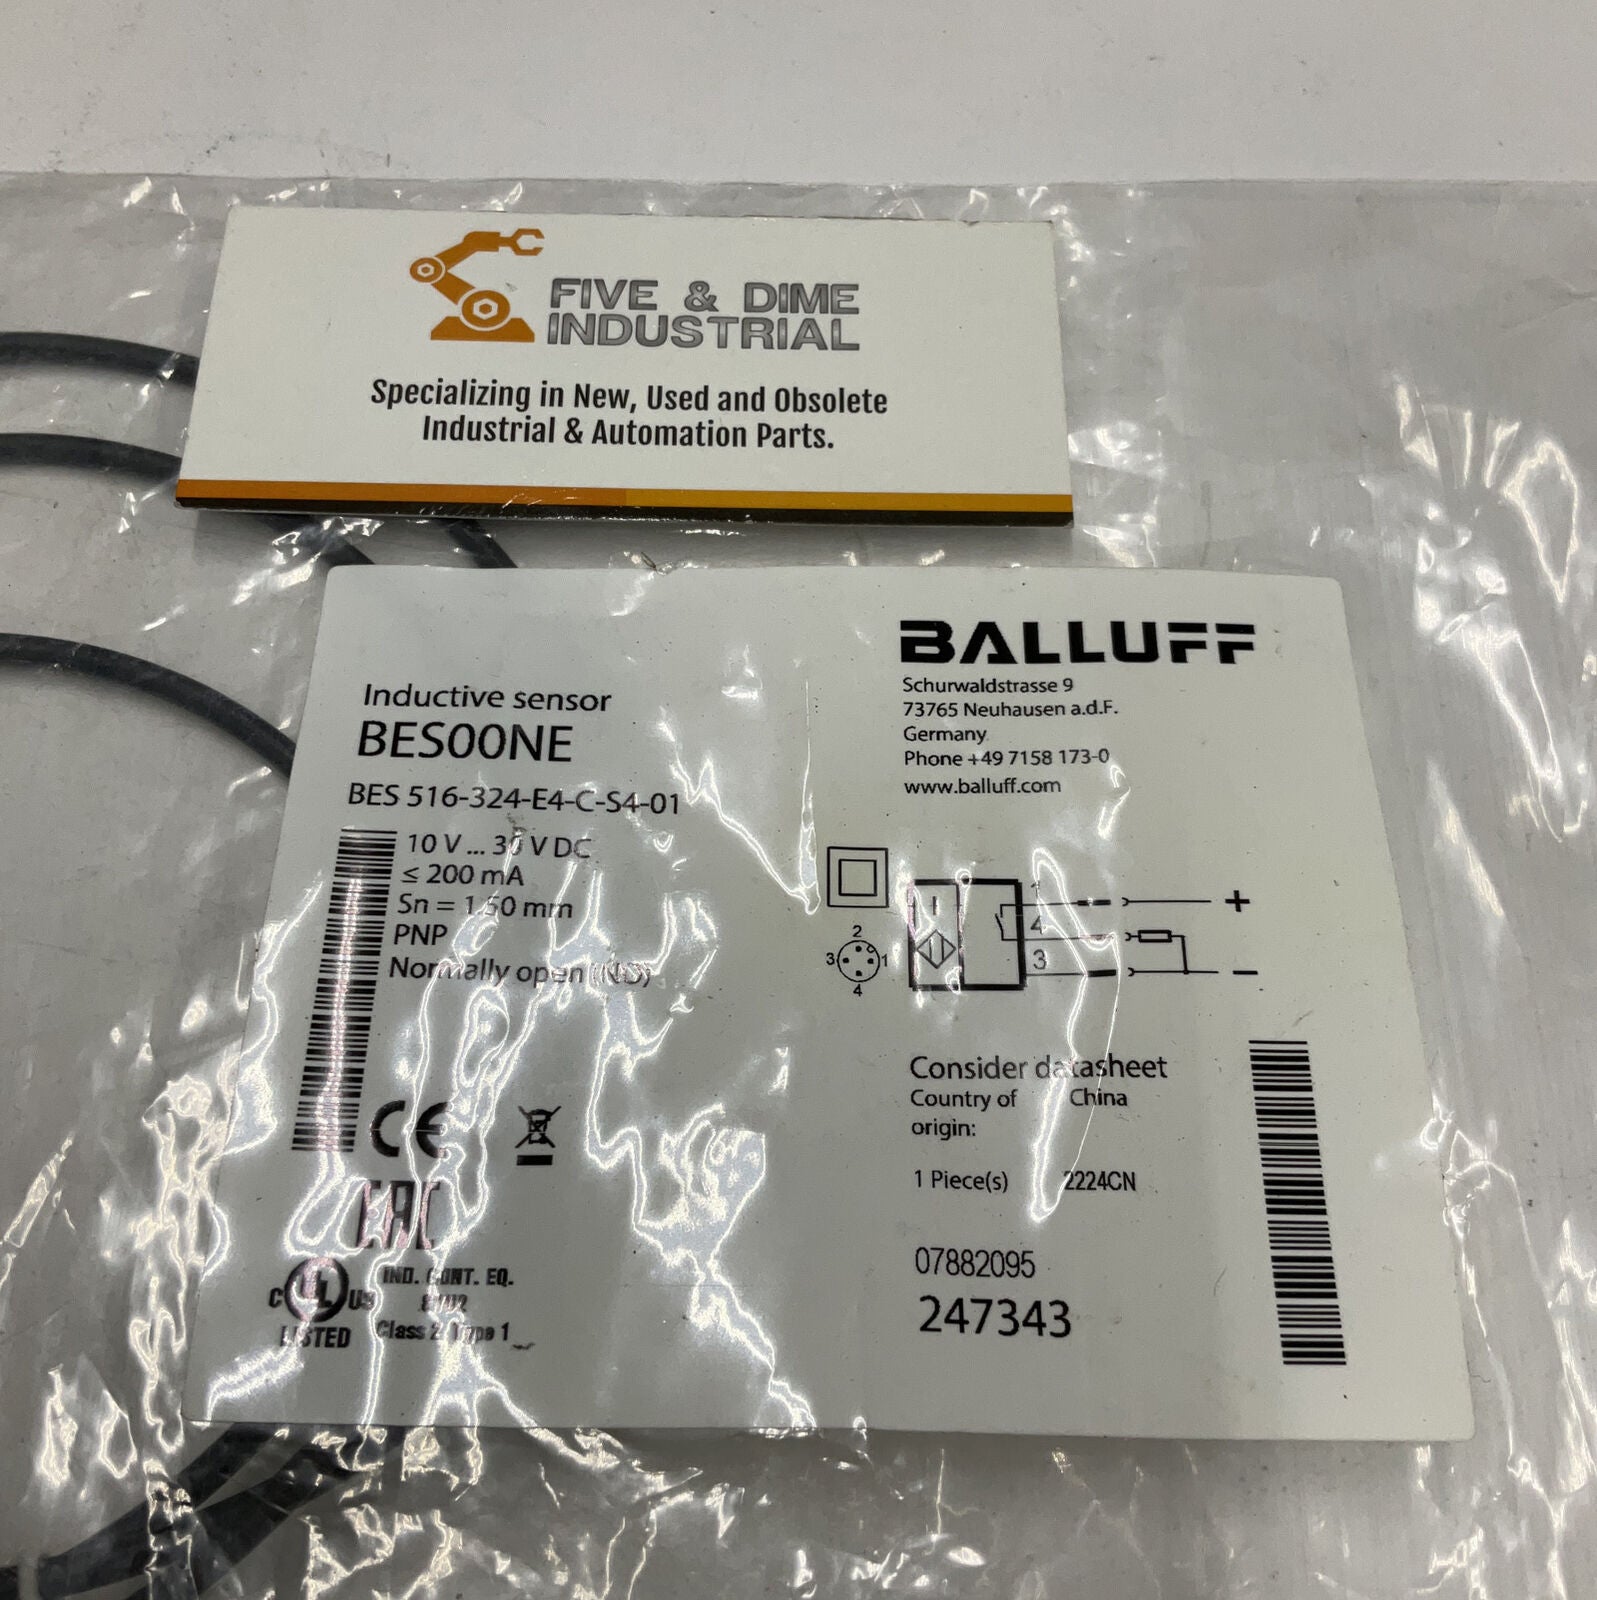 Balluff Besoone Inductive Sensor BES 516-324-E4-C-S4-01 30vcd (BL176)